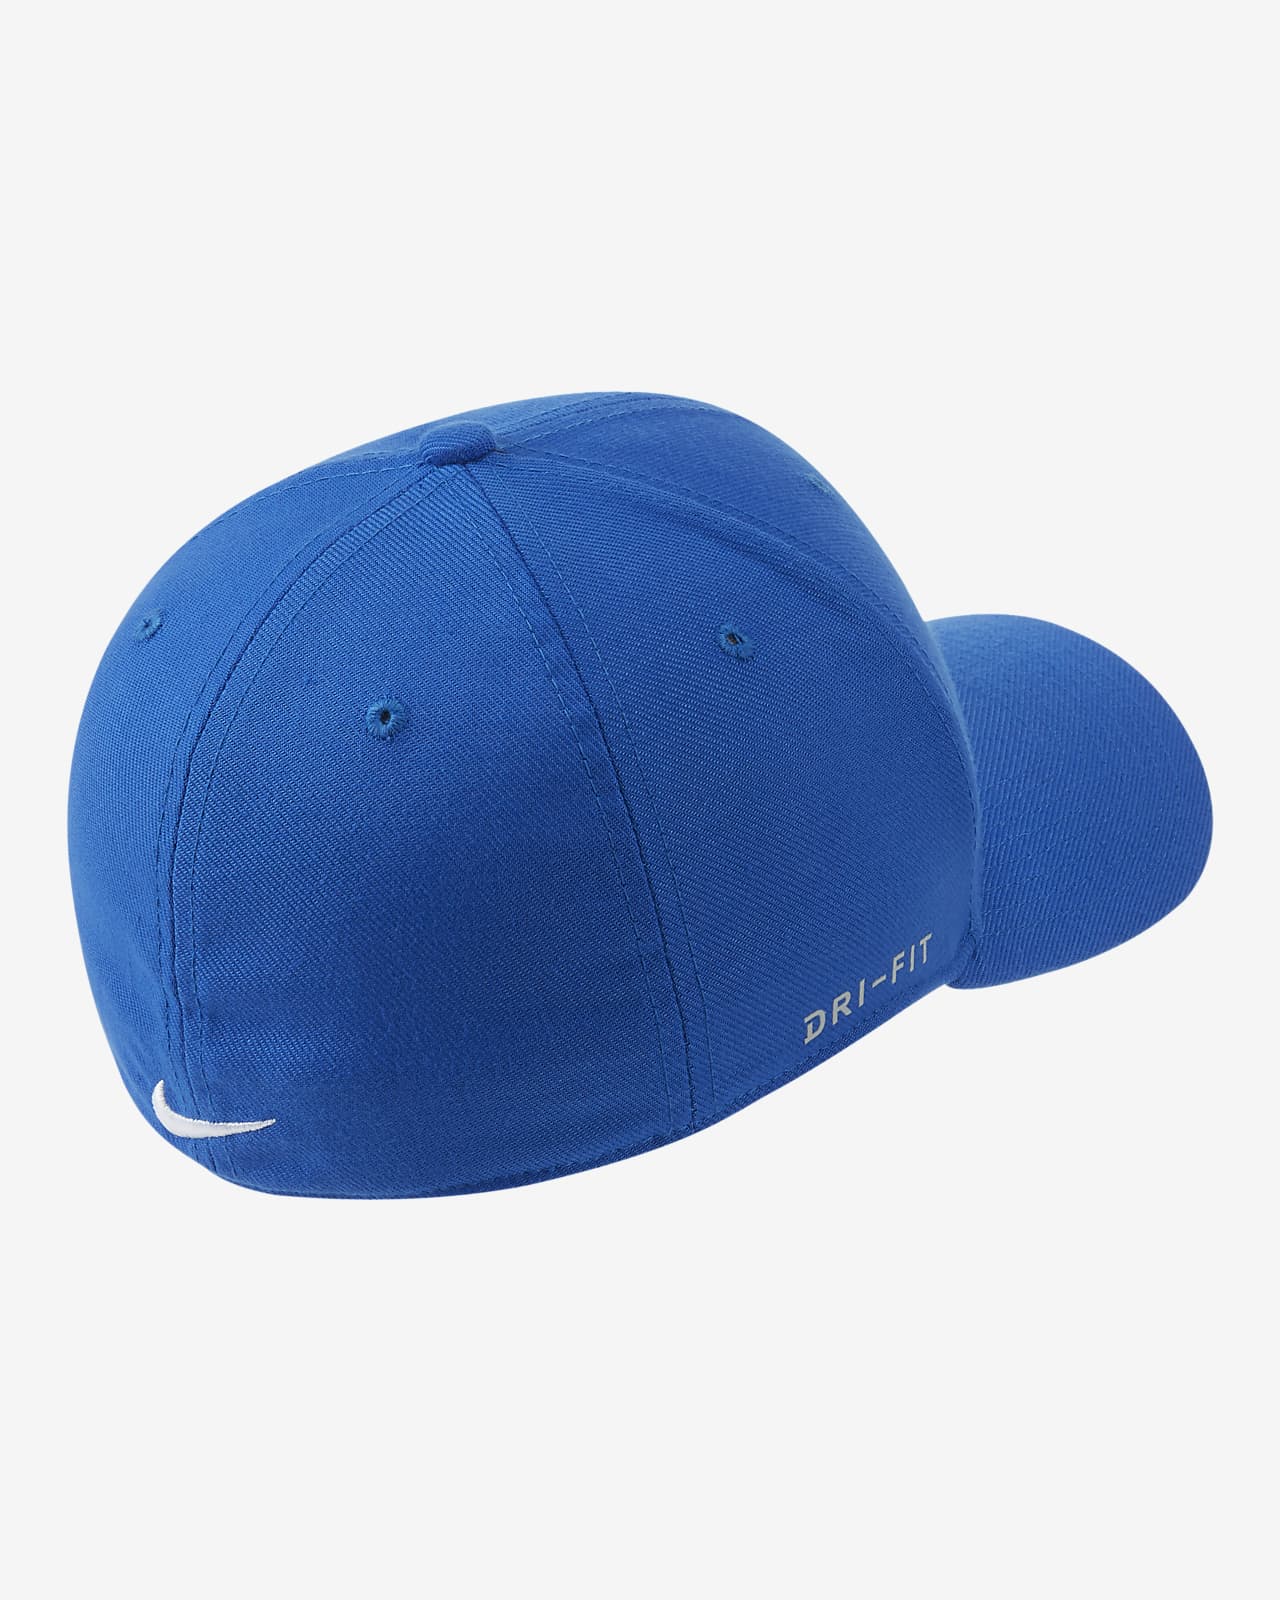 Nike Cap. Nike.com